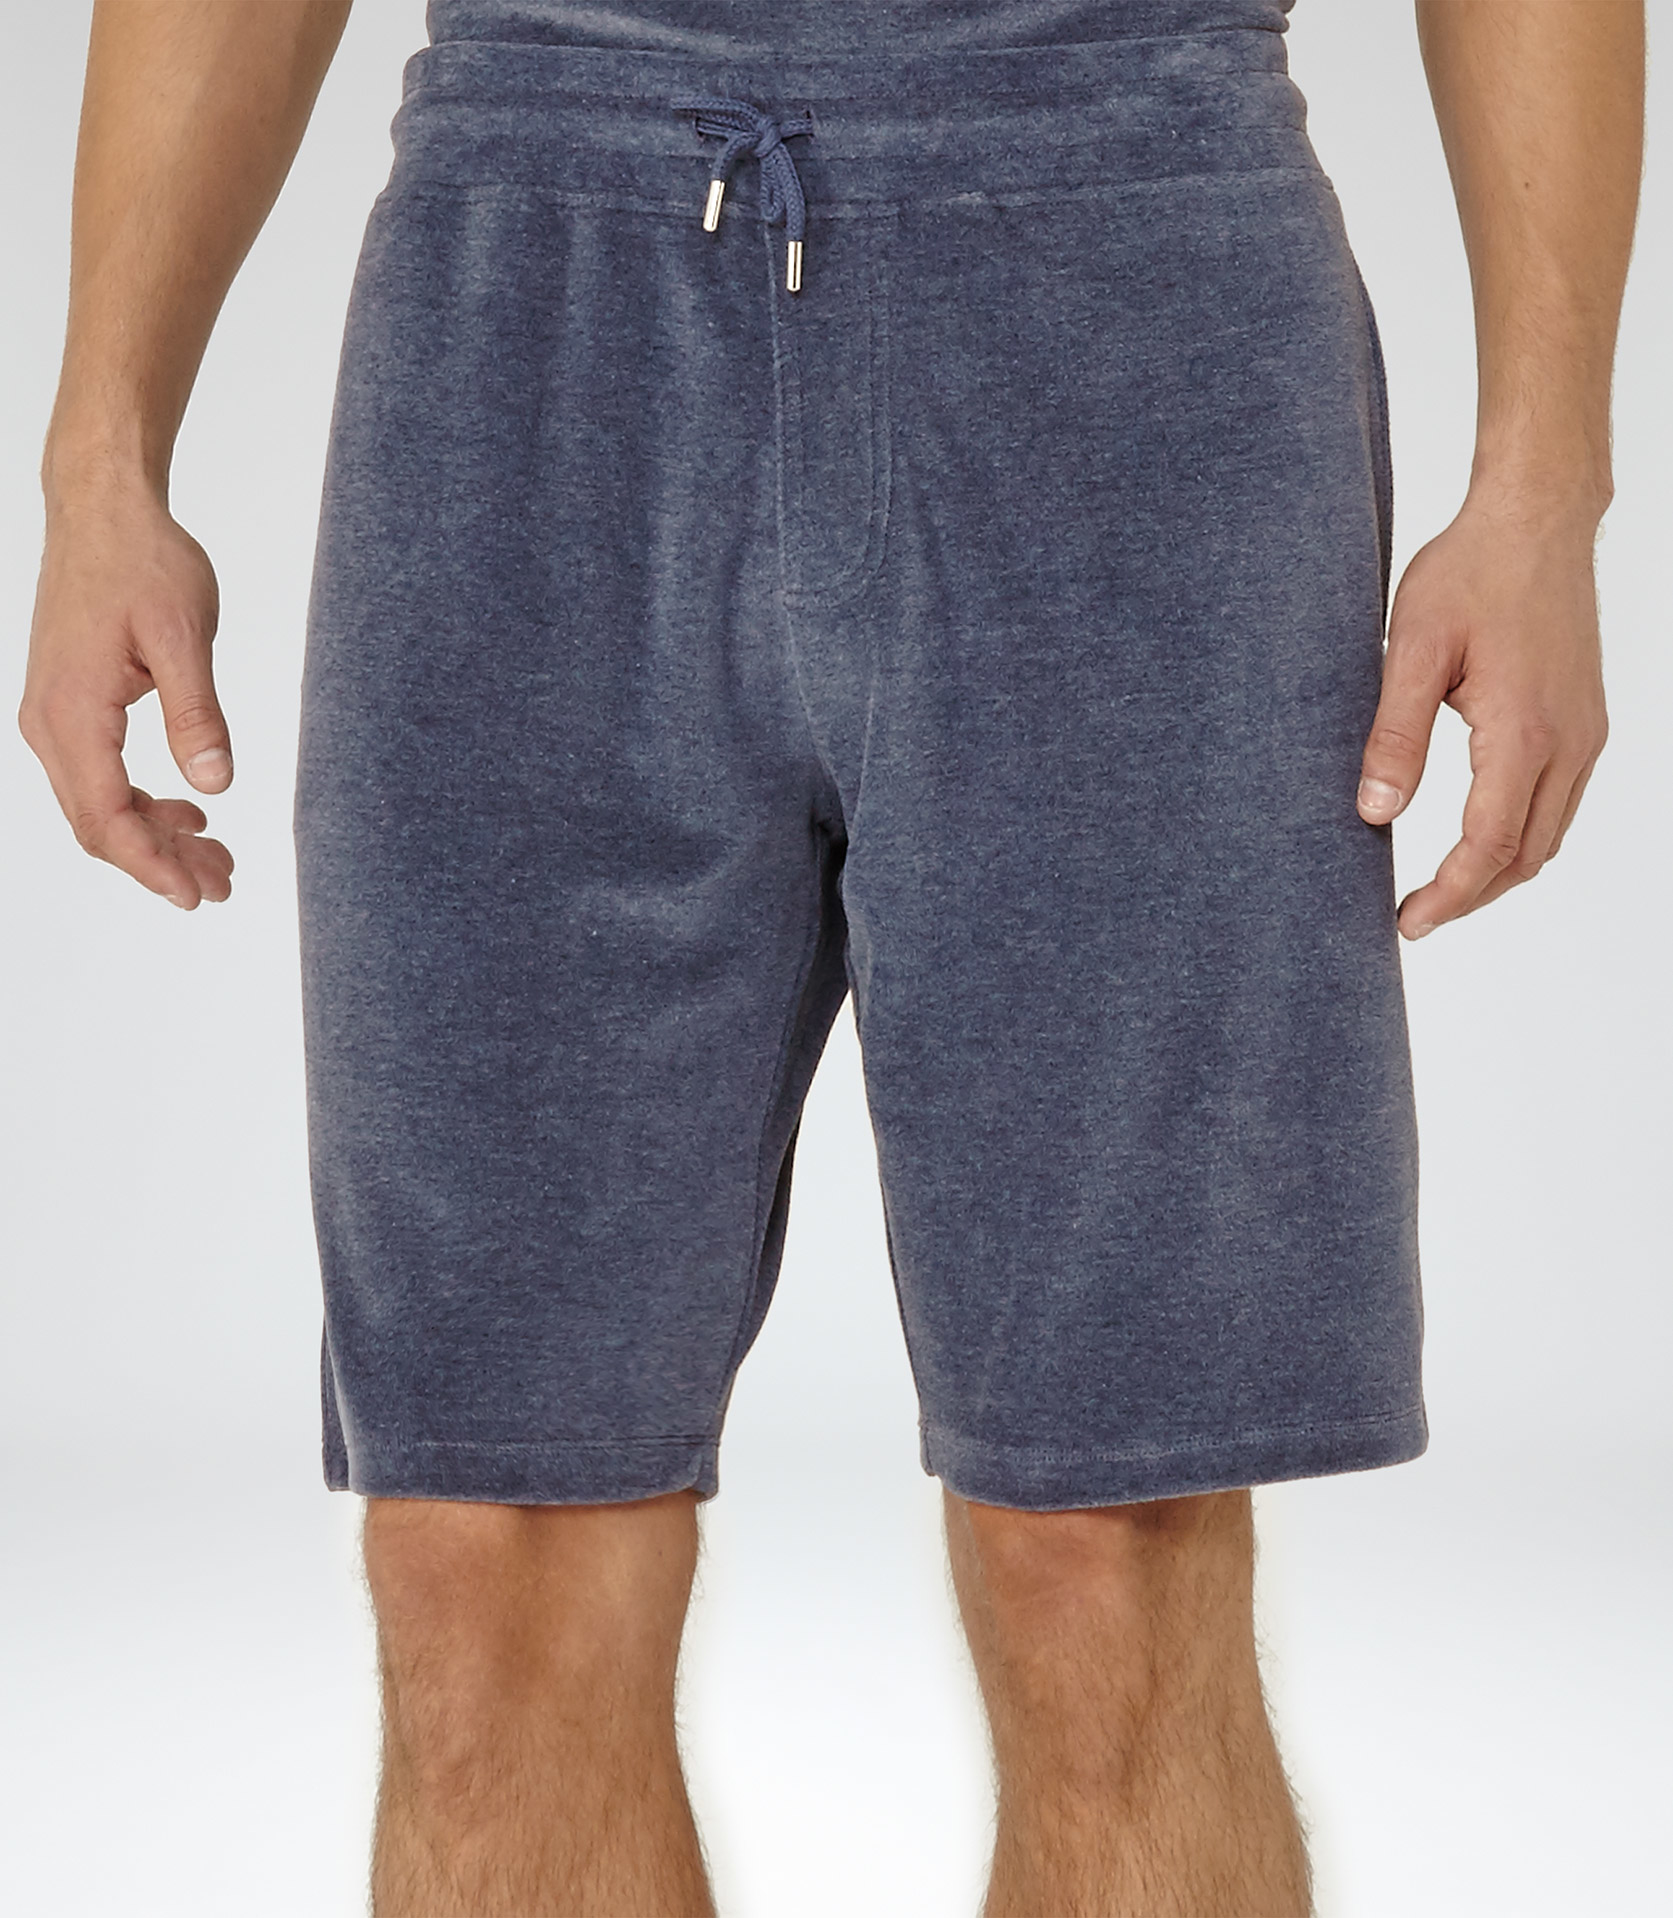 Lyst - Reiss Campari Velour Drawstring Shorts in Blue for Men